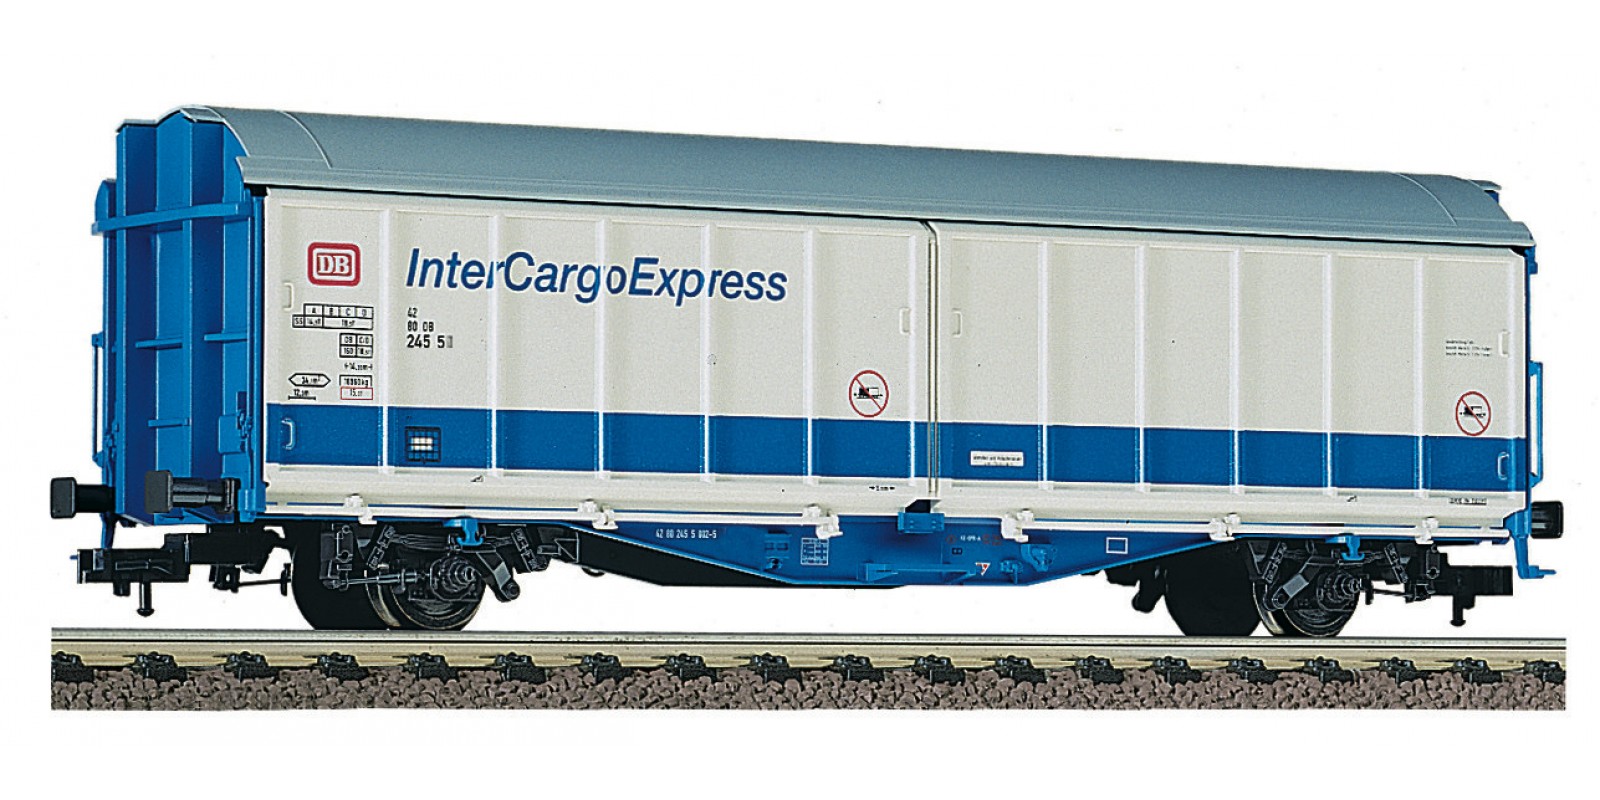 FL537202 - Sliding wall boxcar "InterCargoExpress" type Hbillns 303, DB AG